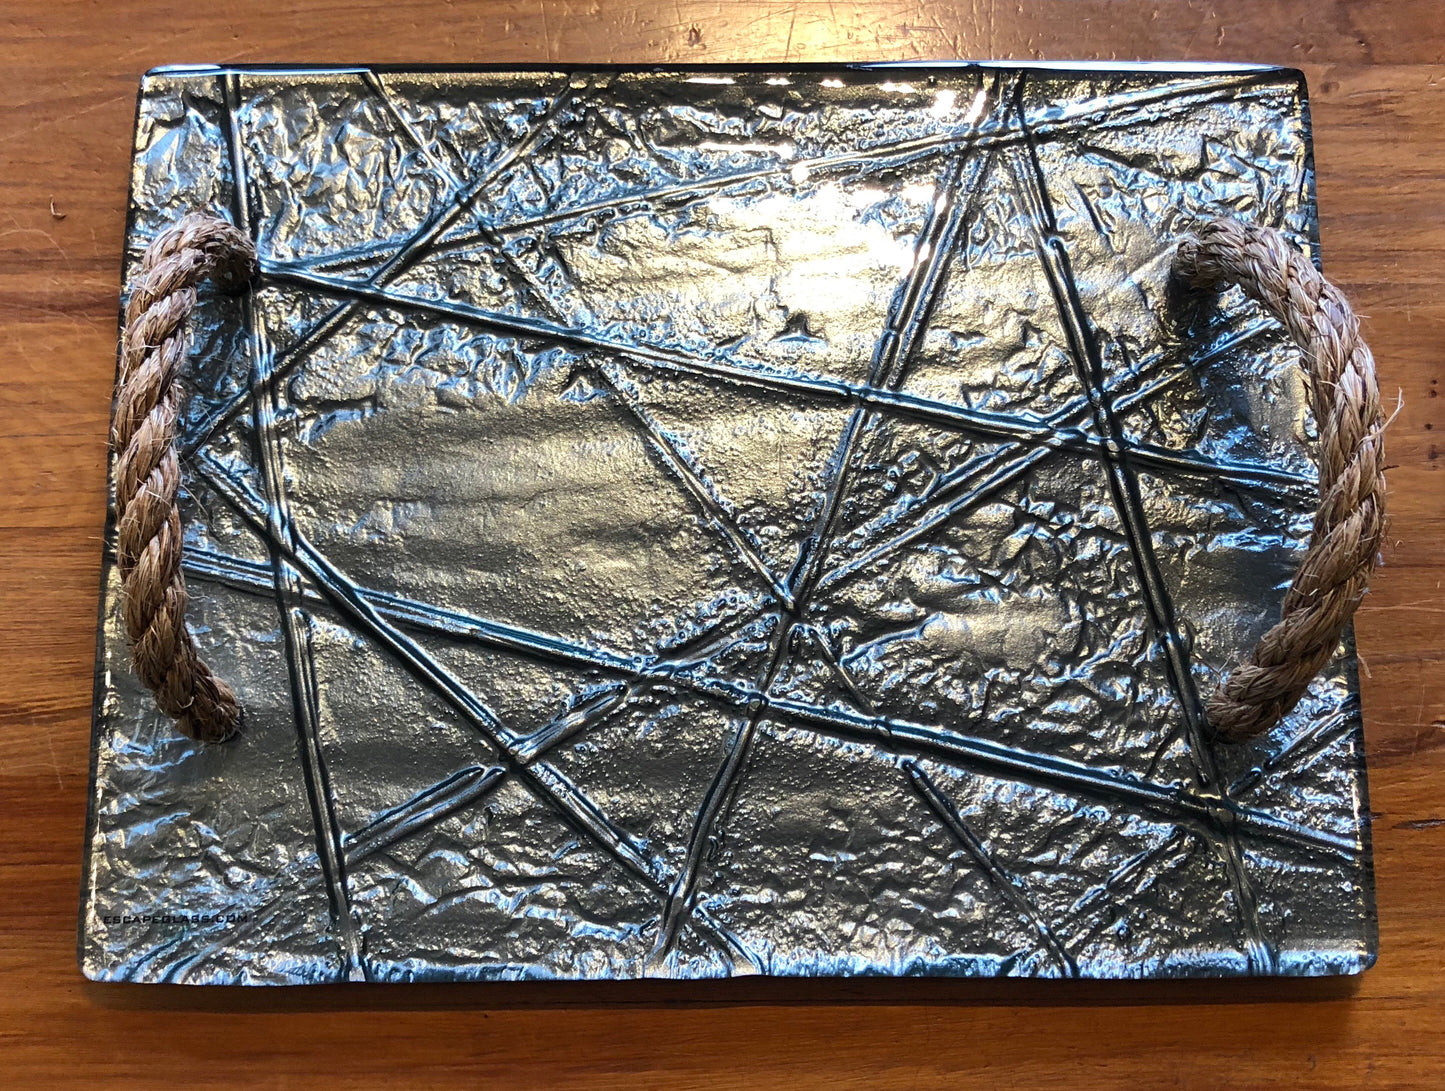 Gunmetal Grey Rope glass print tray serveware platter with rope handles 